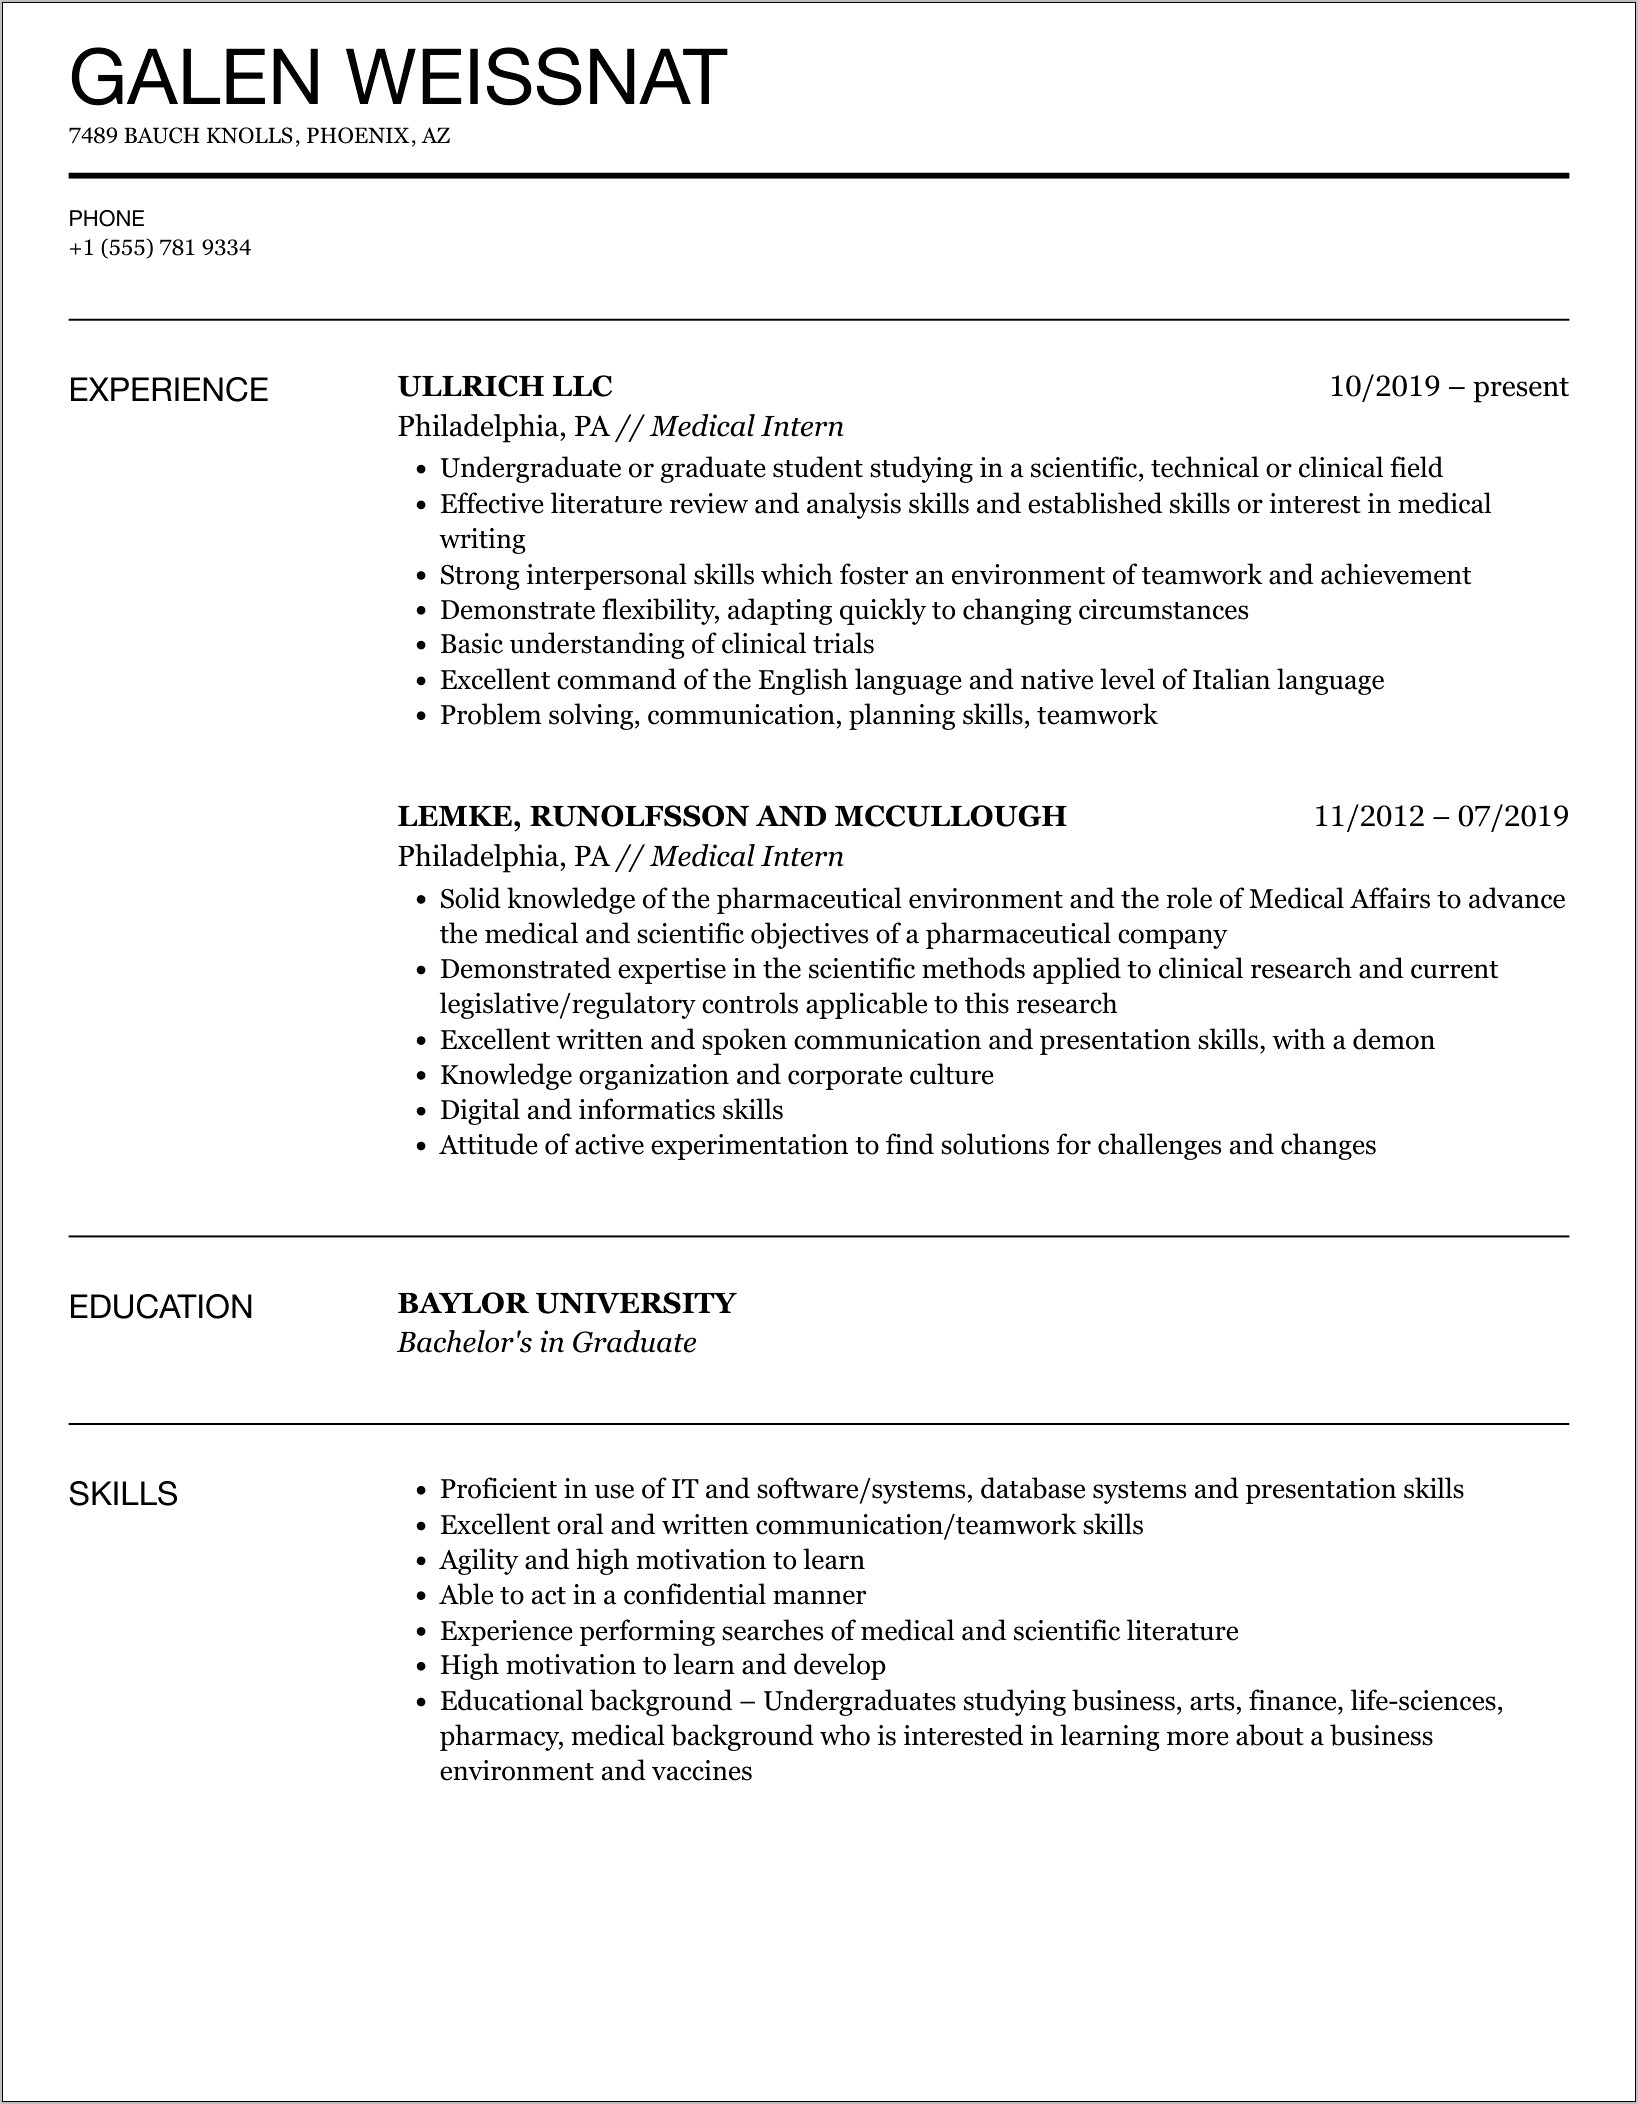 Resume Objective For Healthcare Internship